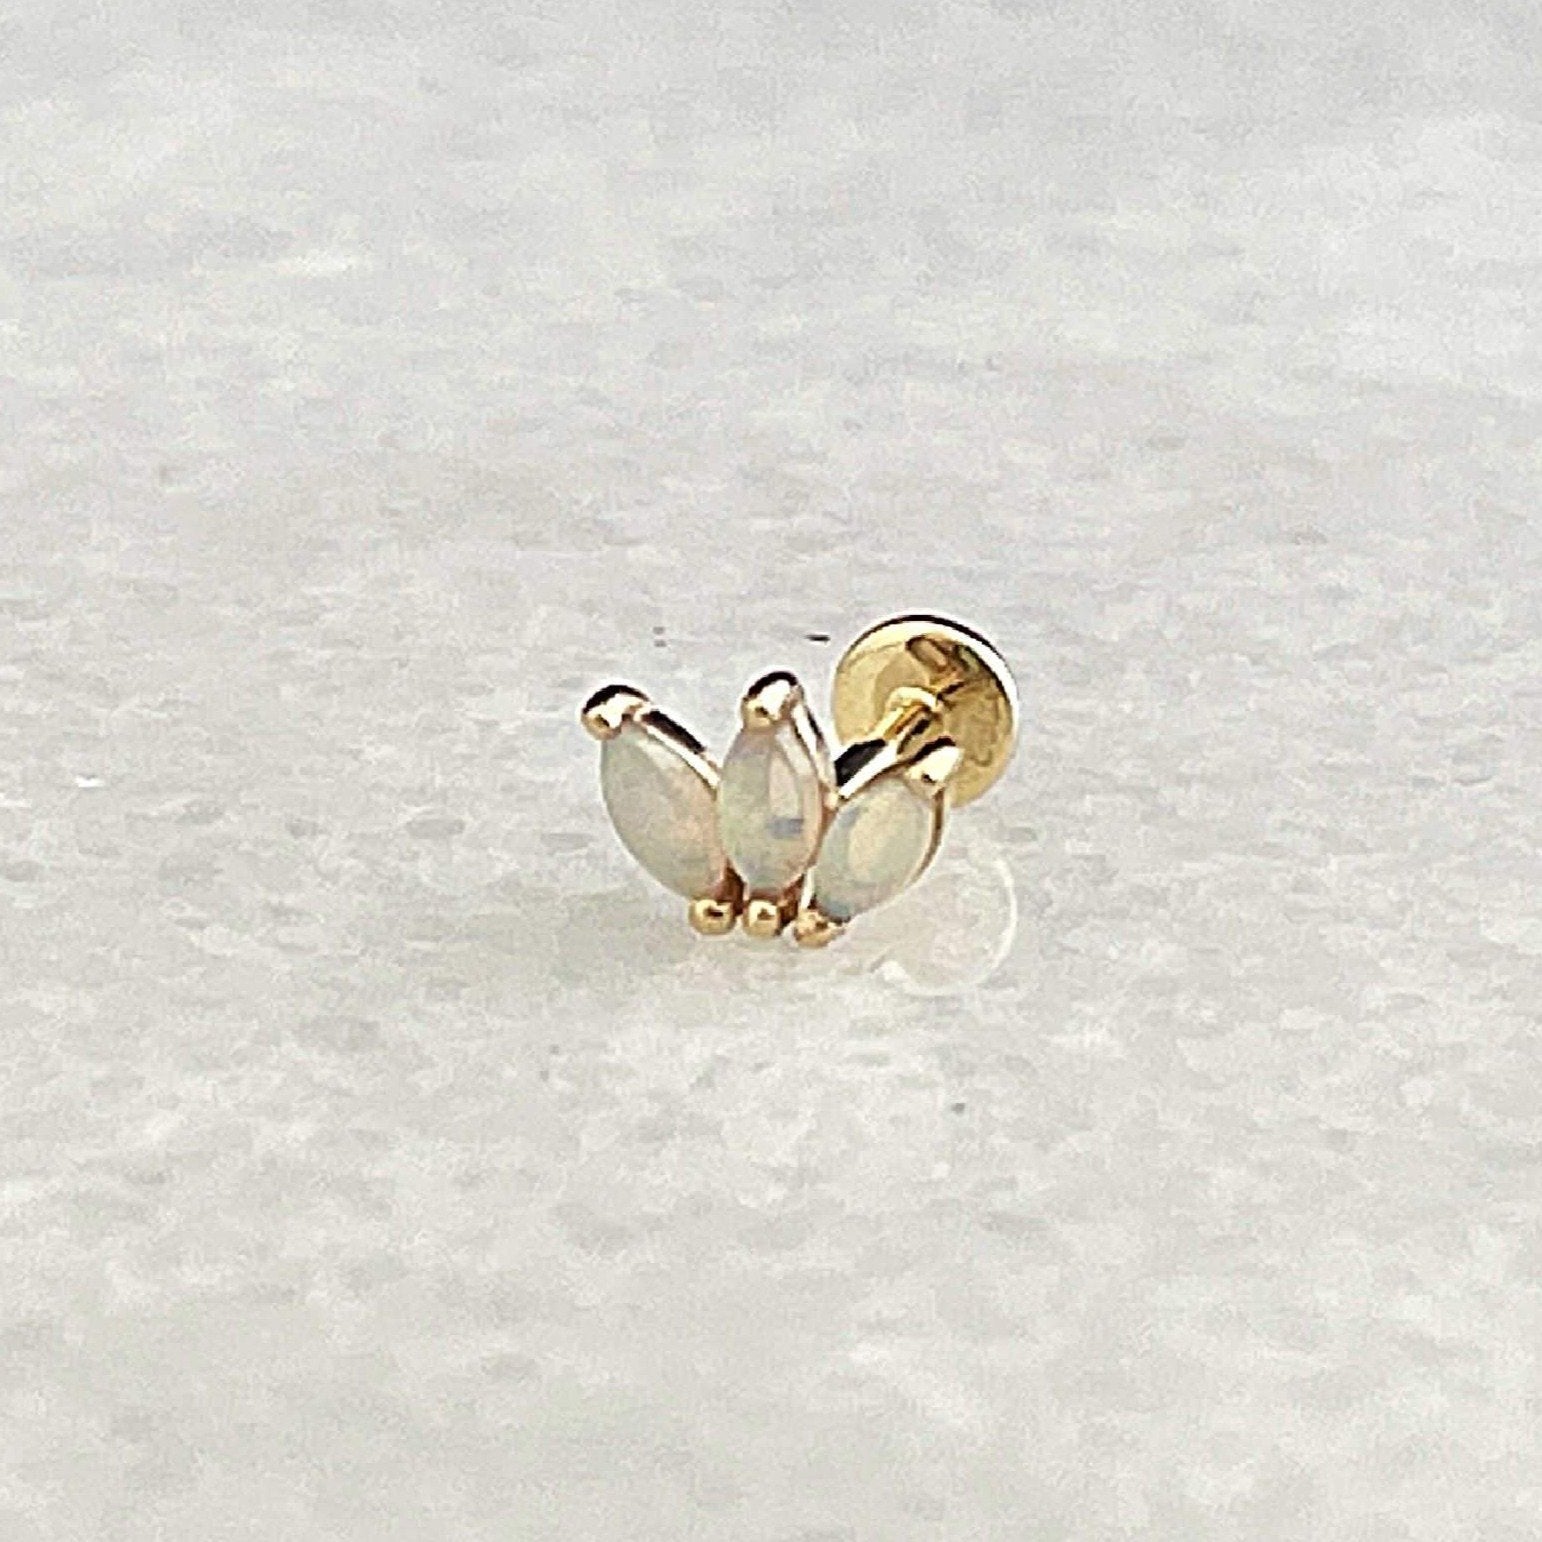 Opal Dangle Helix, Tragus Earring  Gold Flat Back Piercing Stud – Two of  Most